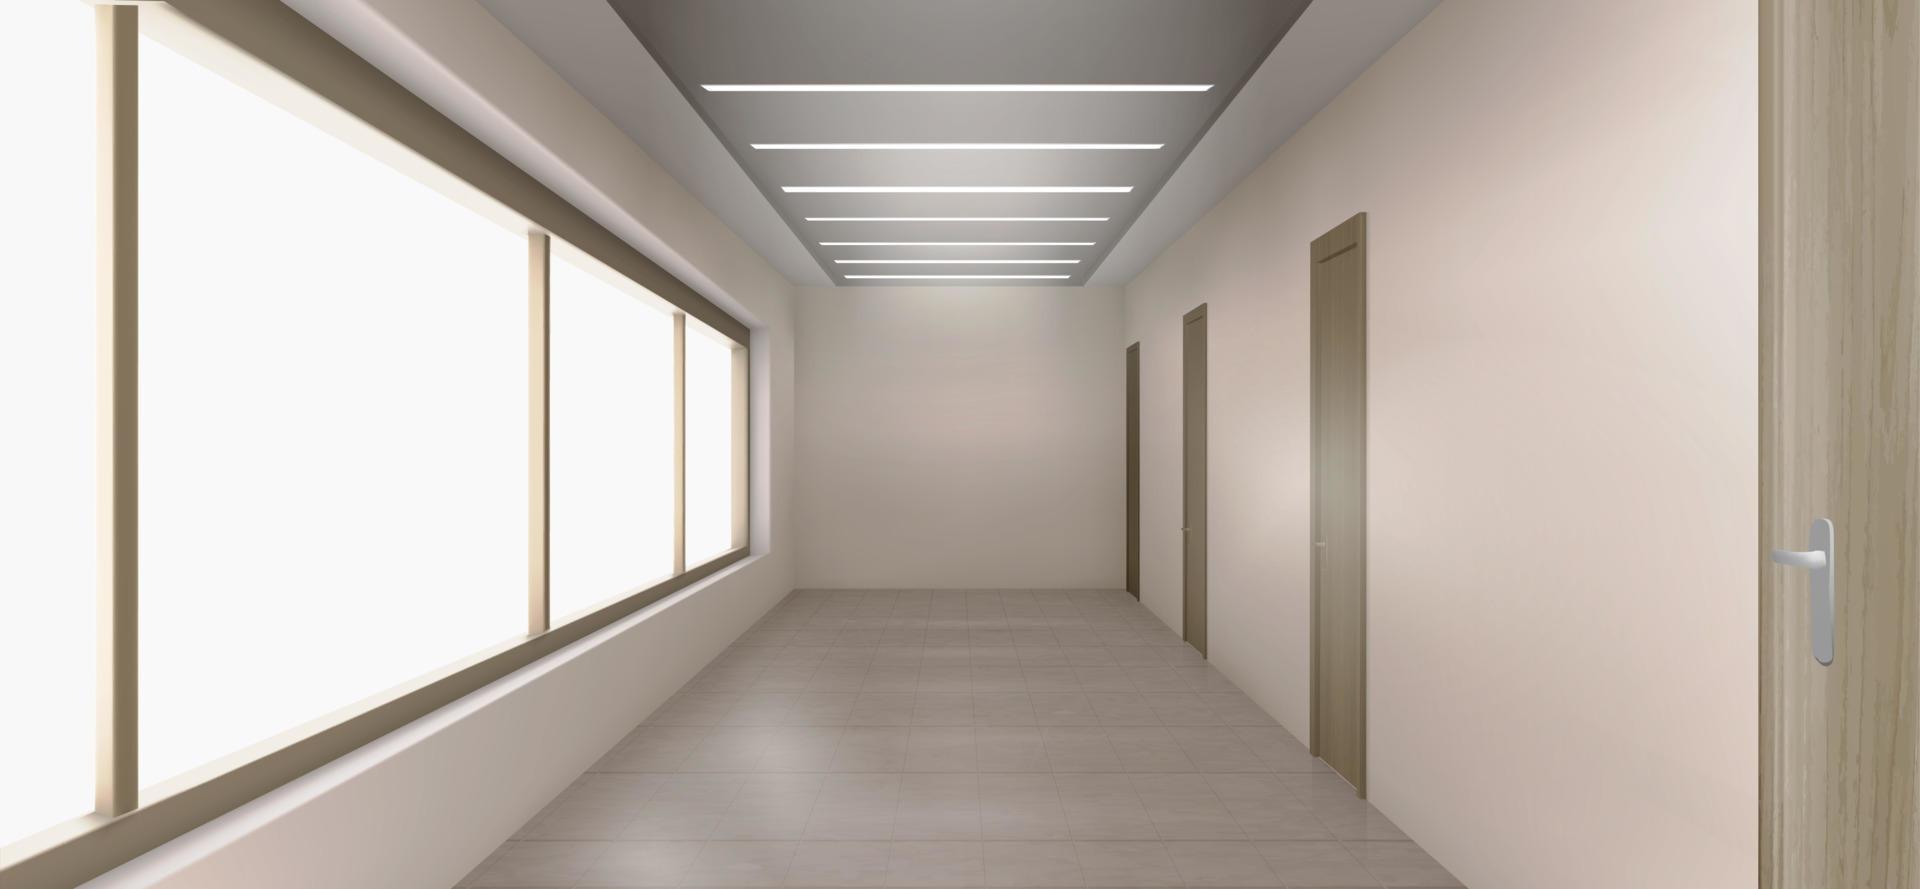 Hospital corridor interior with closed doors vector